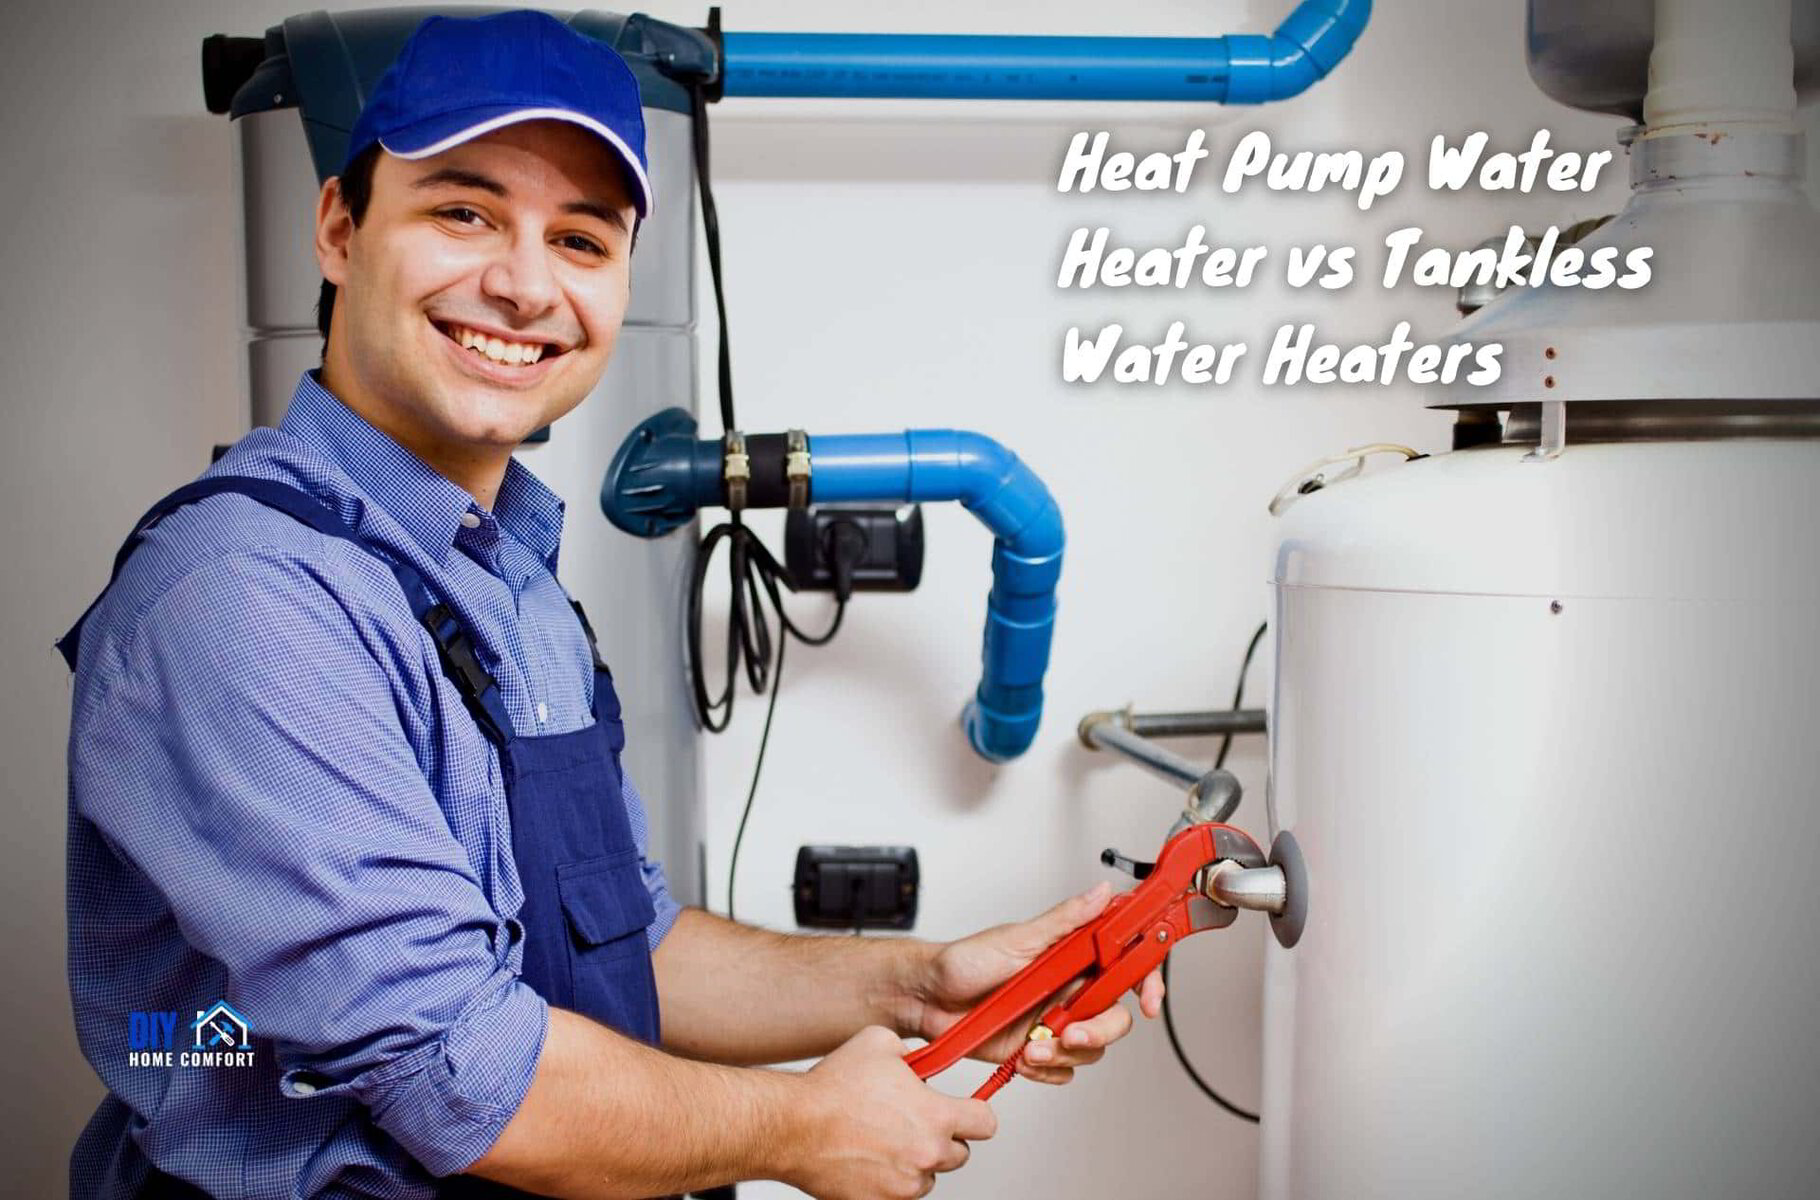 https://content.app-sources.com/s/40460189946594834/uploads/Blog_Images/Heat_Pump_Water_Heater_vs_Tankless_Water_Heaters-5026605.jpg